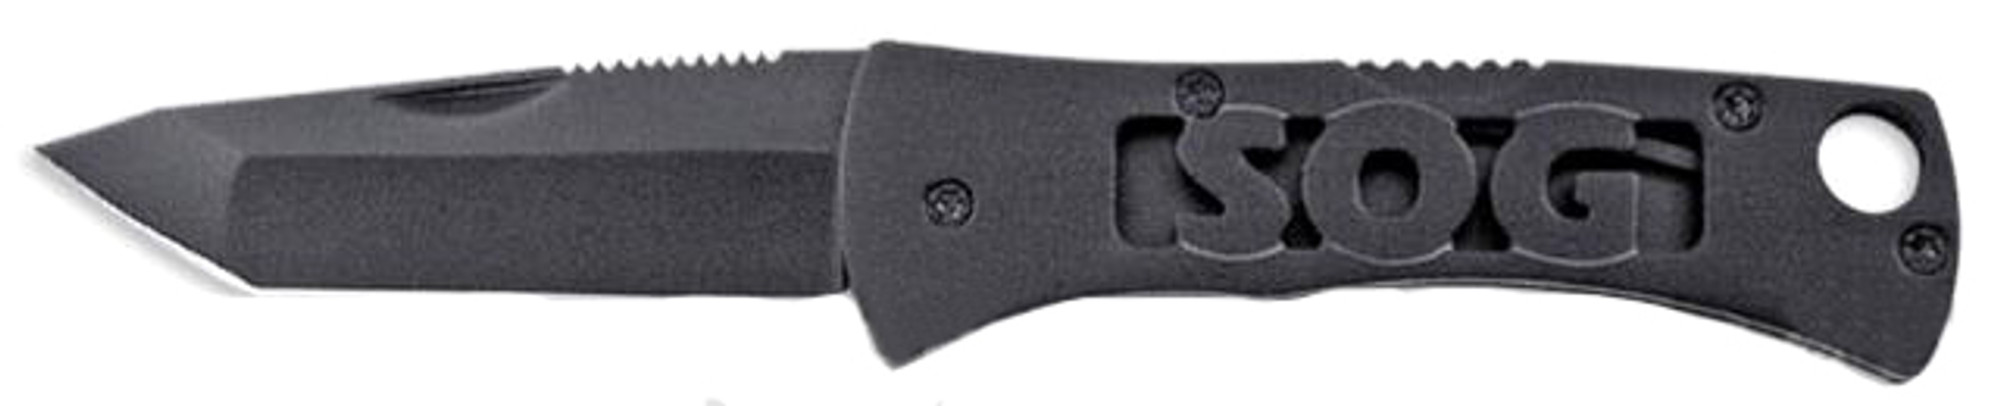 SOG Micron 2.0 Folding Tactical Knife - Black Tanto